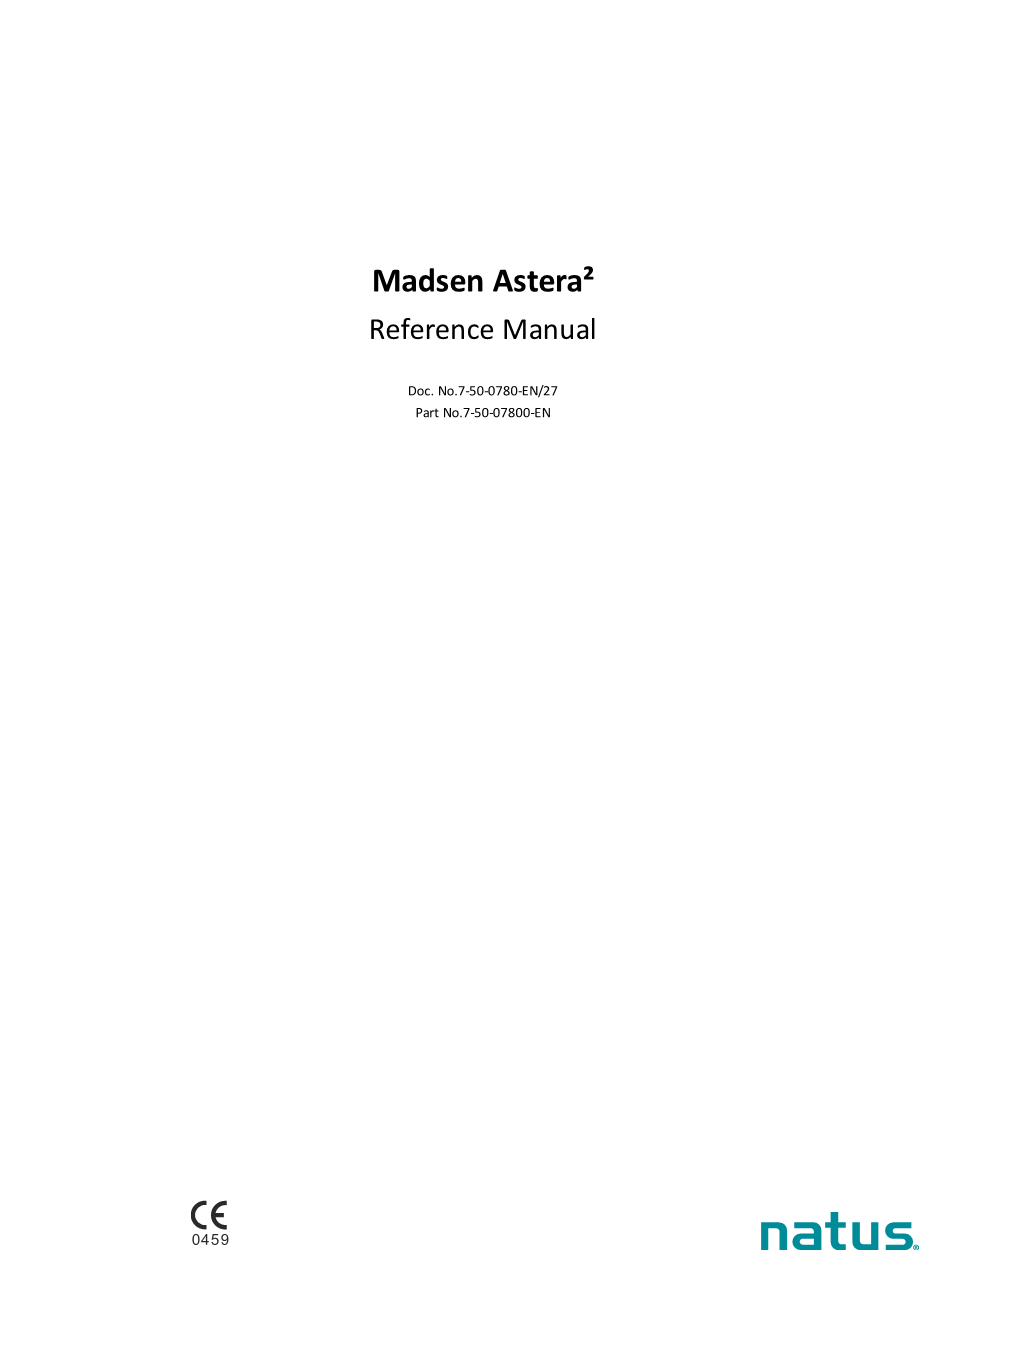 Madsen Astera² Reference Manual